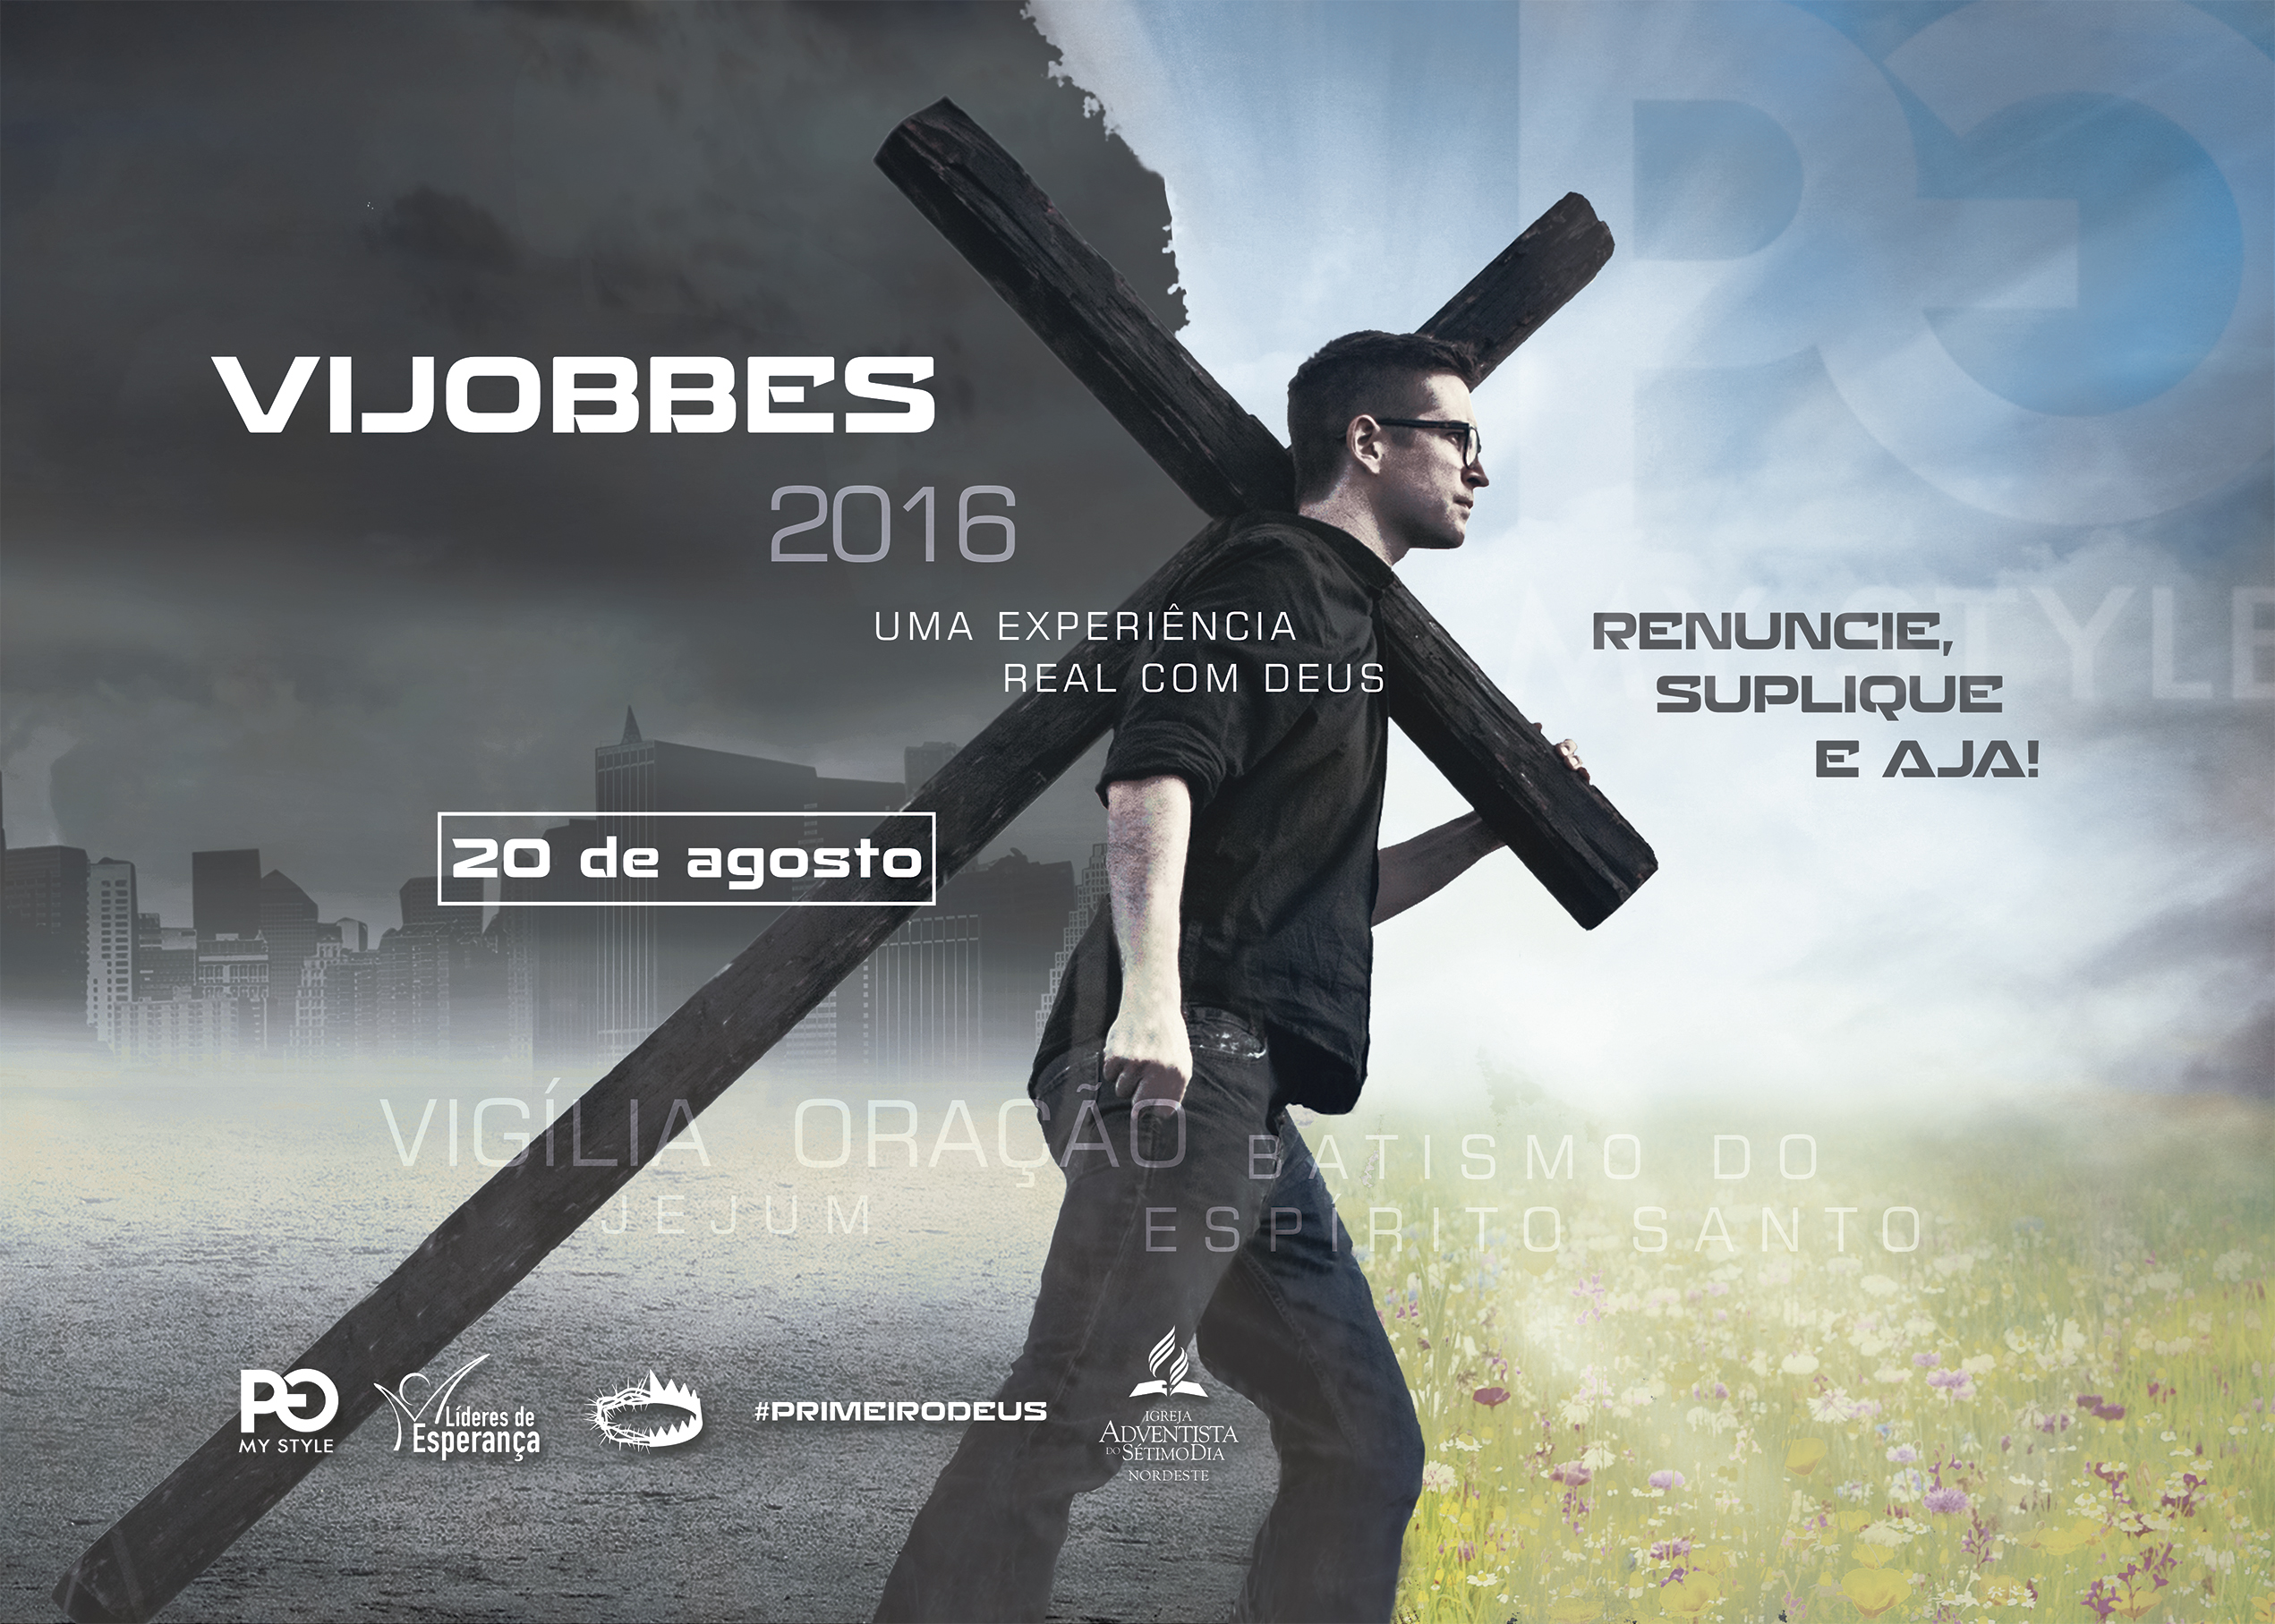 VIJOBBES 2016 - Testemunho